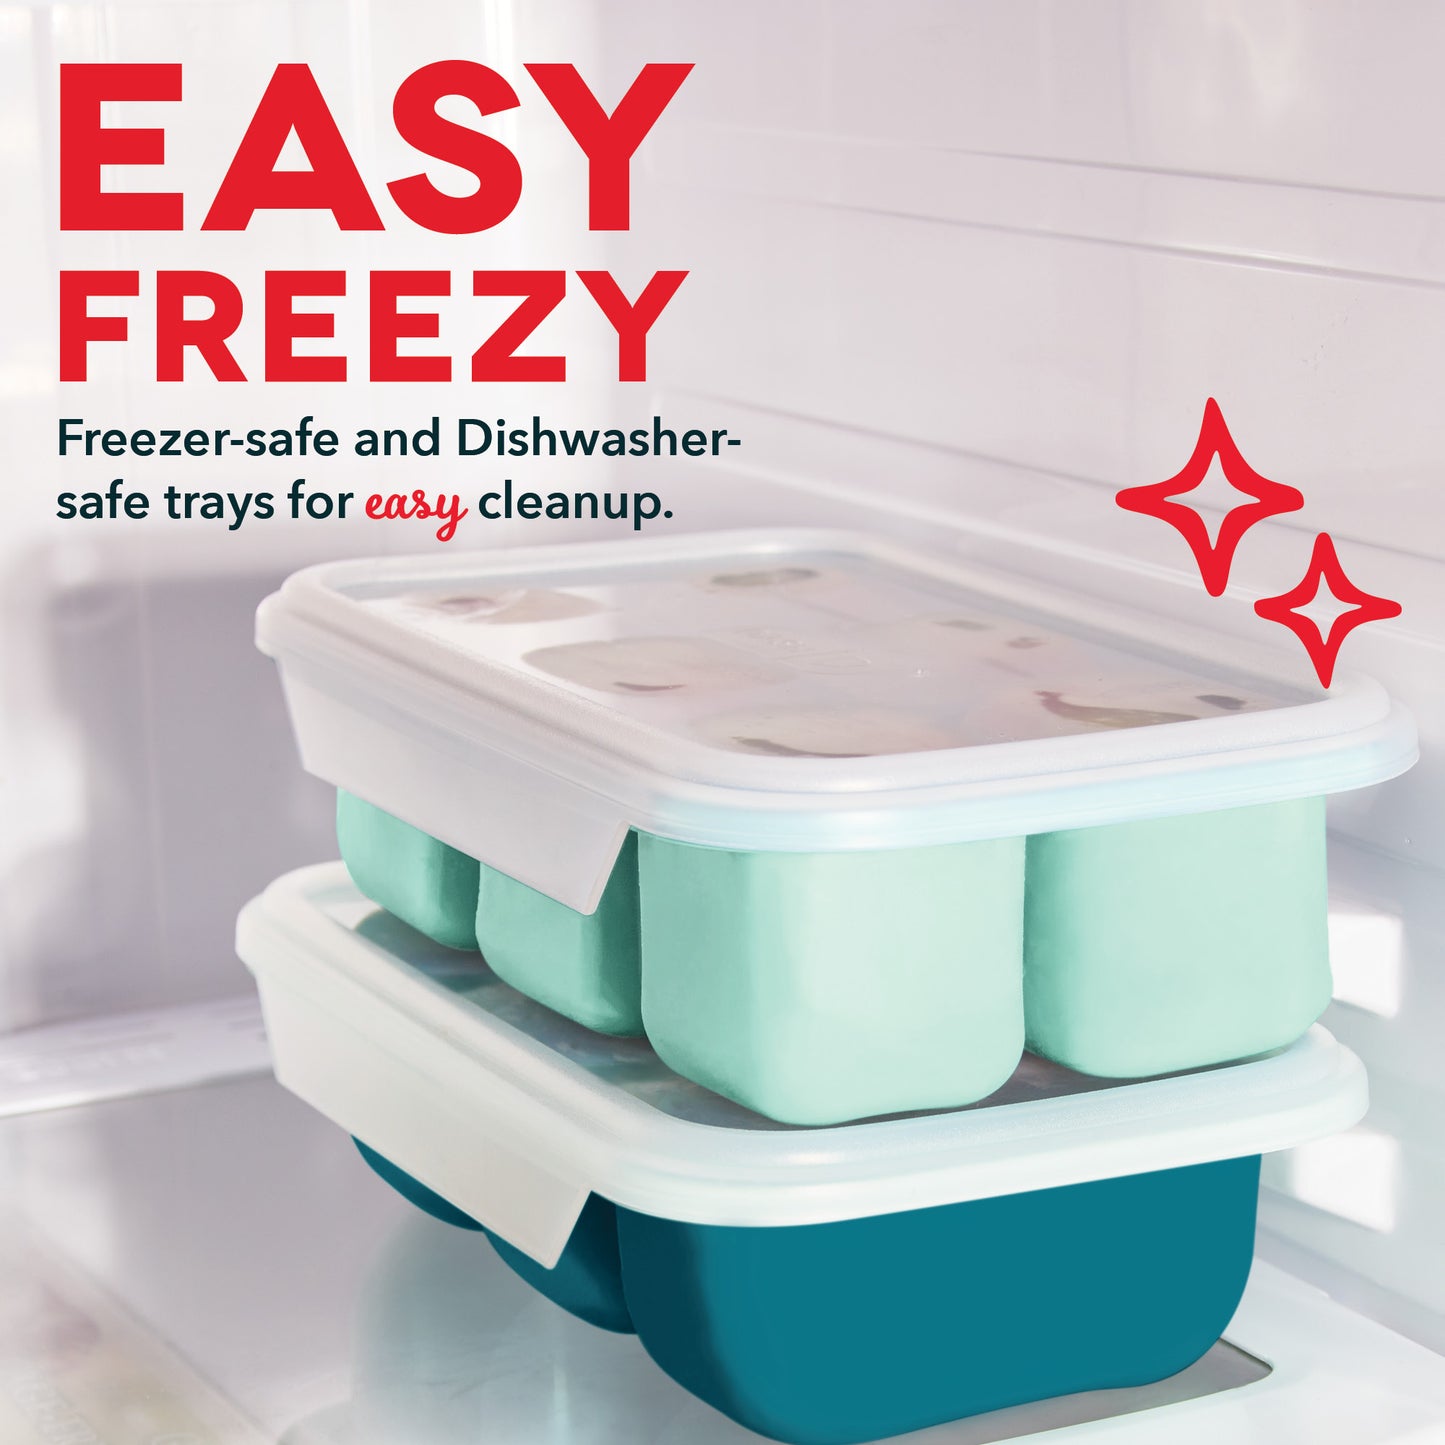 Perfect Portion Freezer Trays – Dash